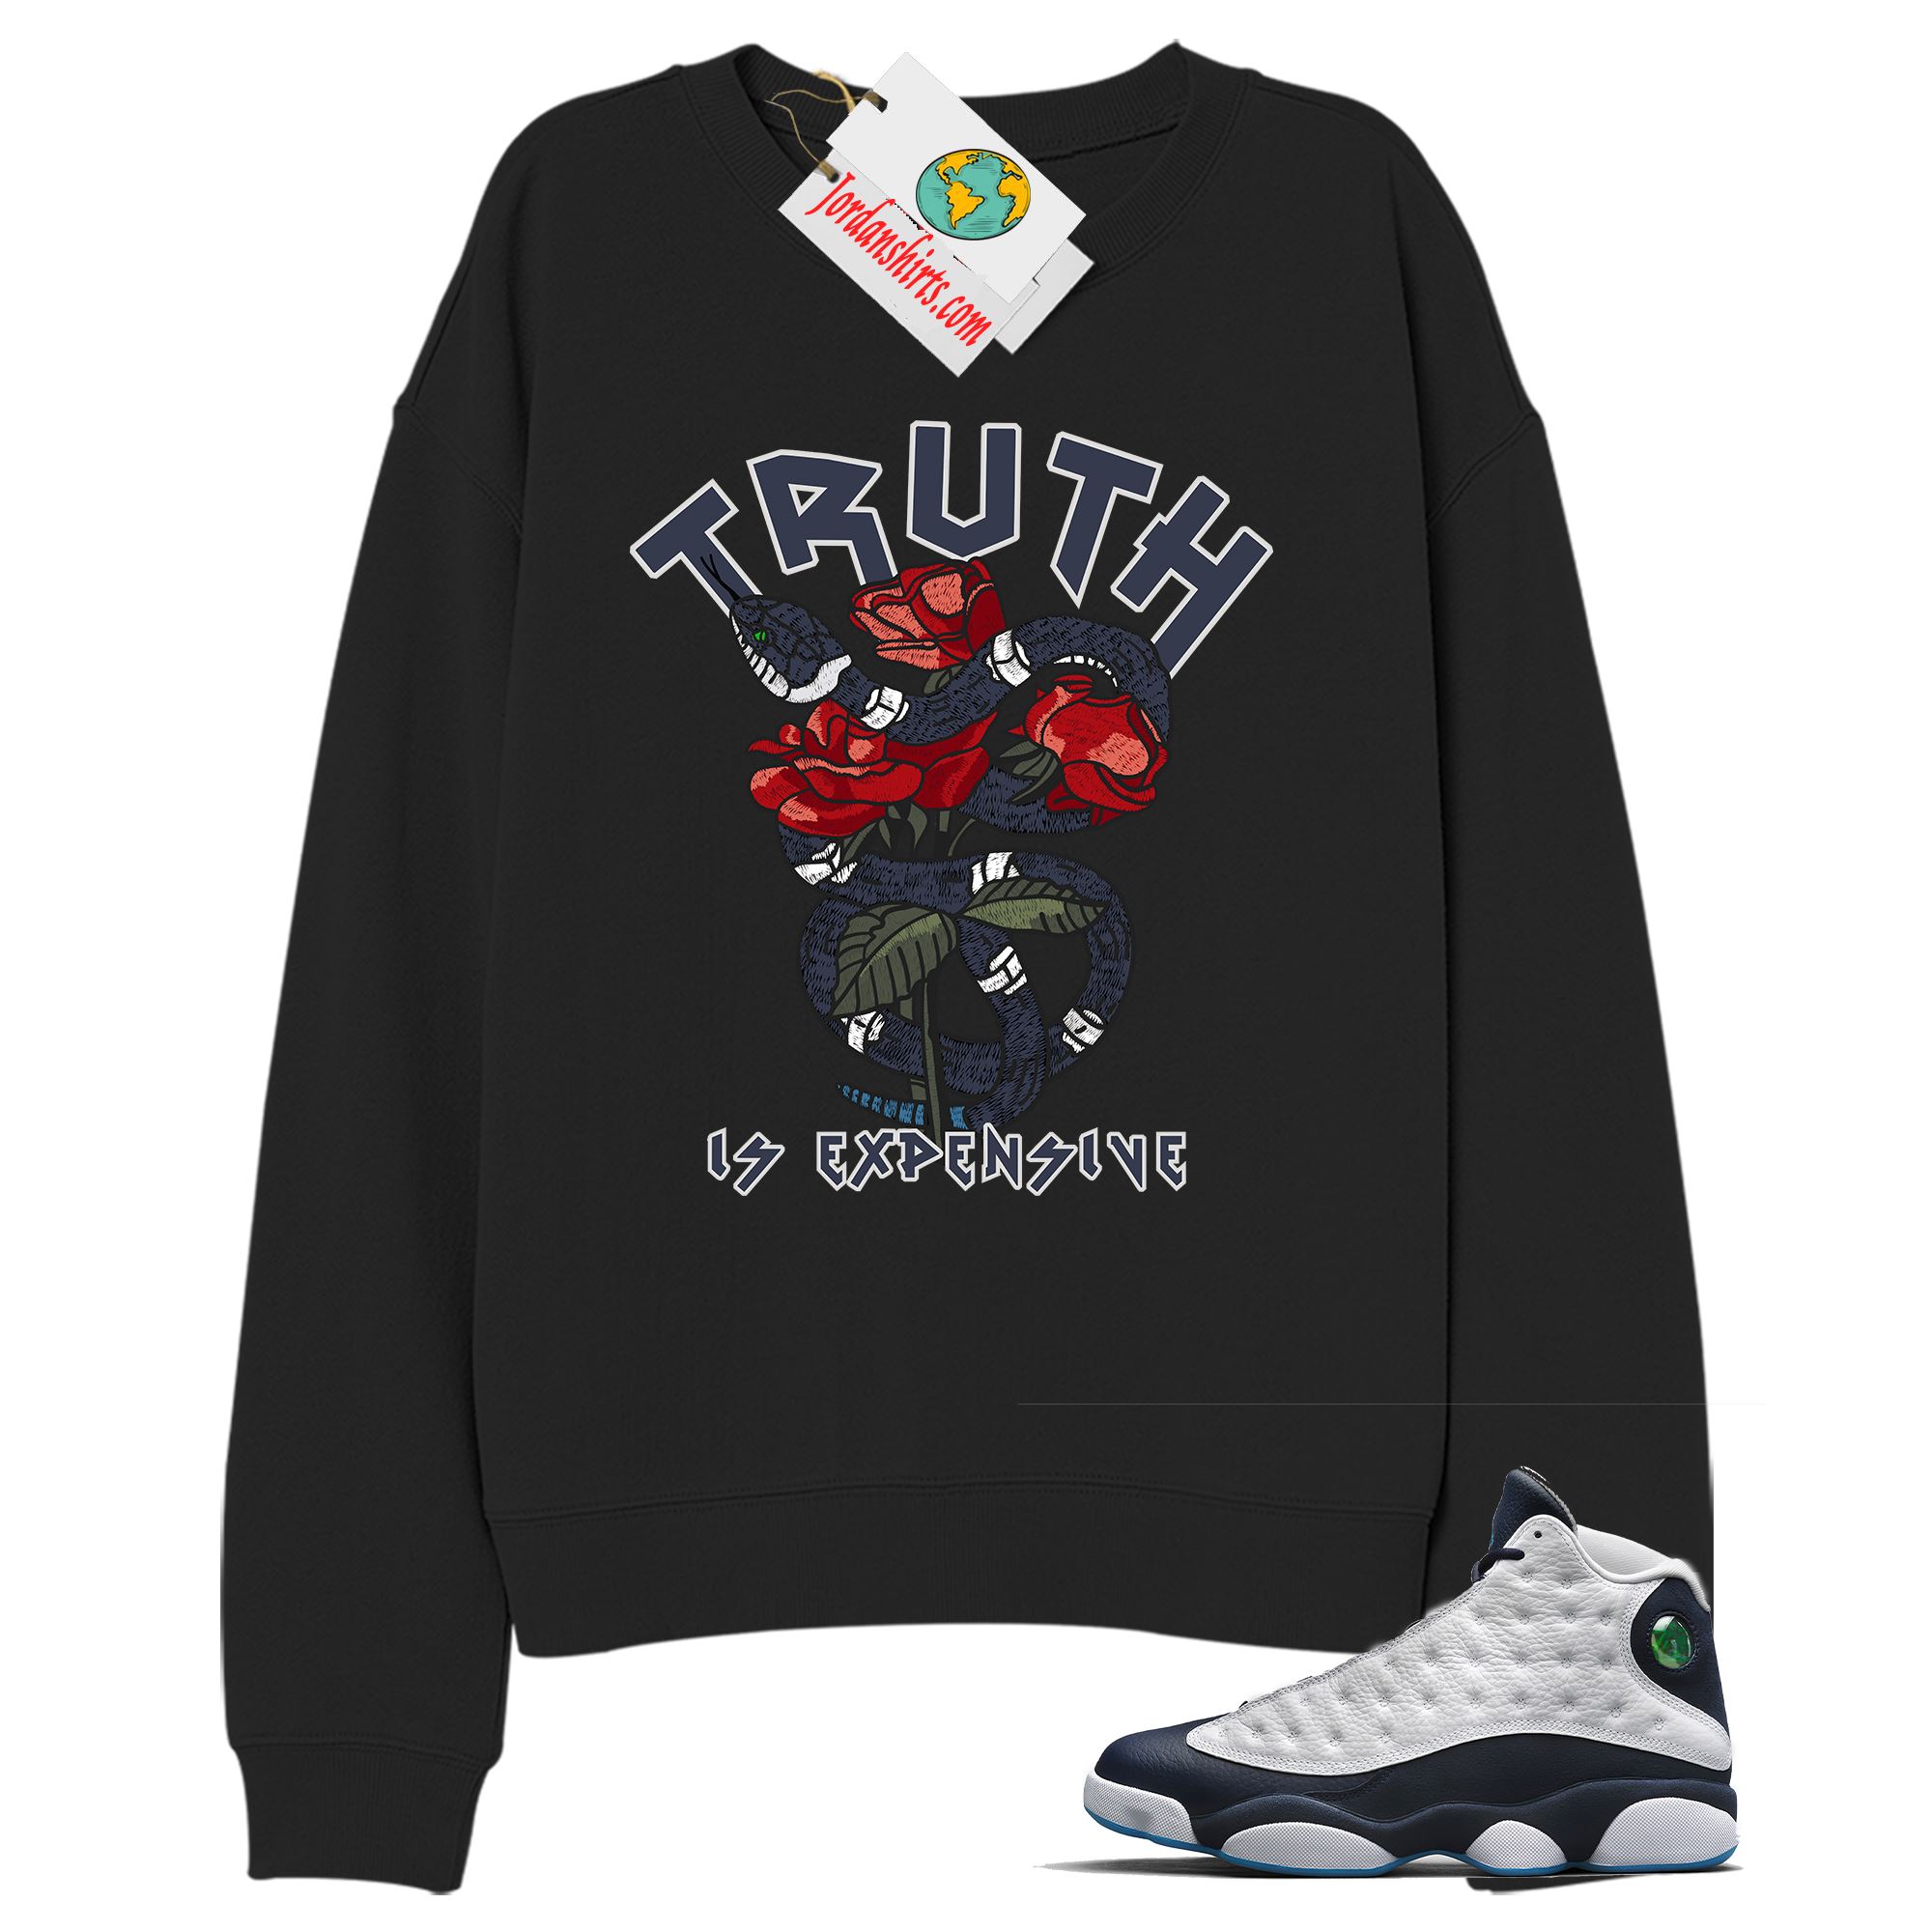 Jordan 13 Sweatshirt, Truth Is Expensive Snake Black Sweatshirt Air Jordan 13 Obsidian 13s Size Up To 5xl